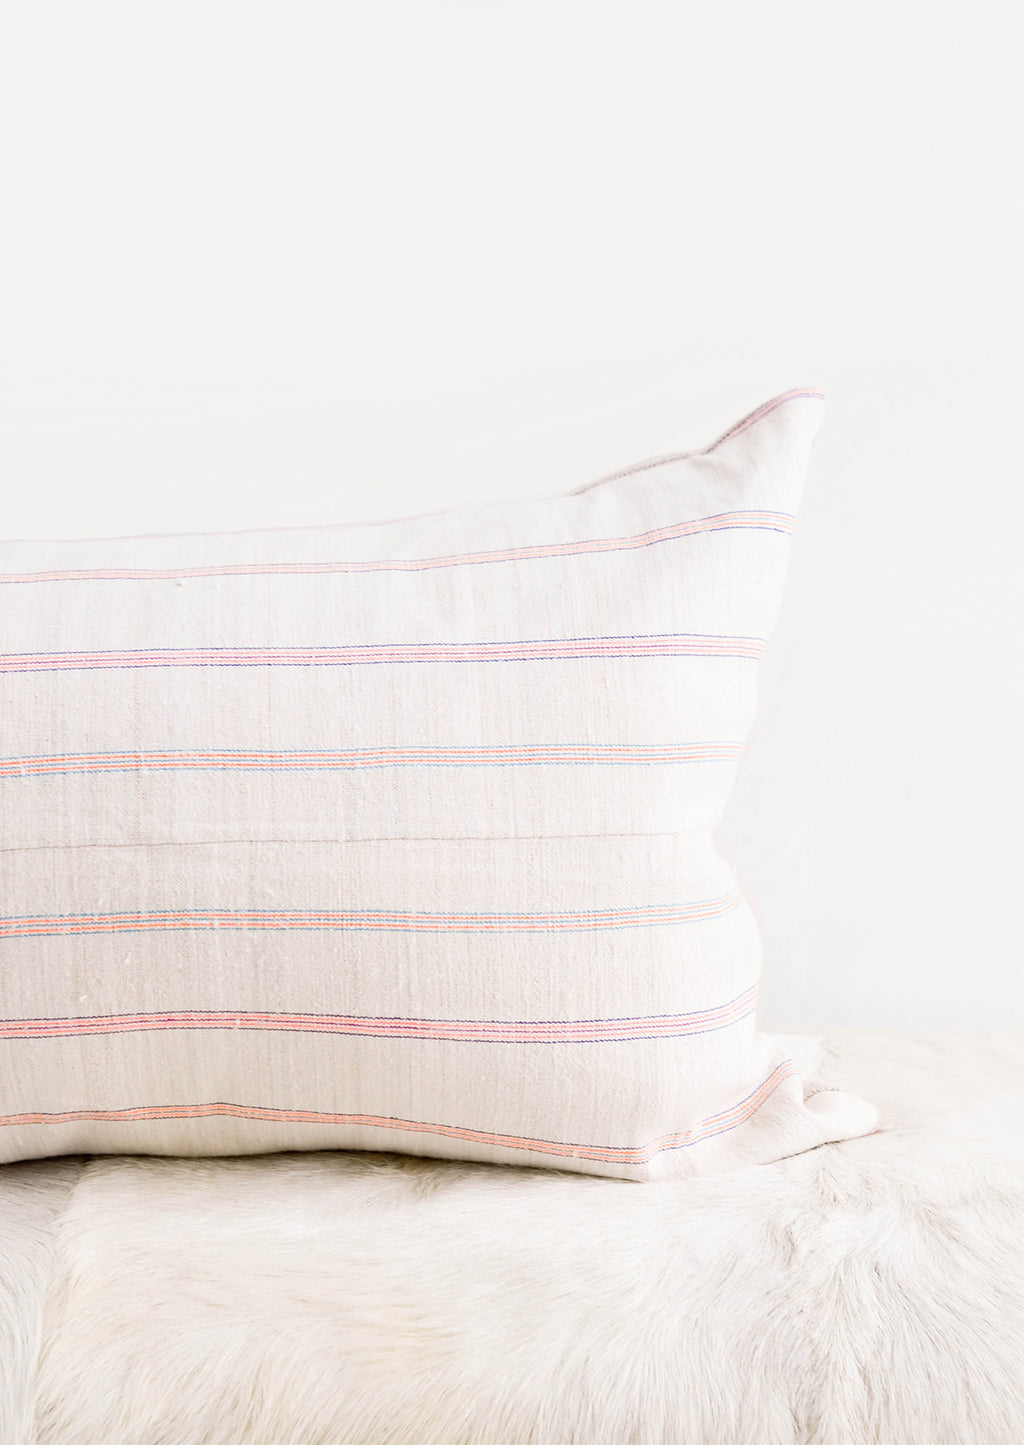 2: Rectangular throw pillow in light fabric with horizontal neon stripes